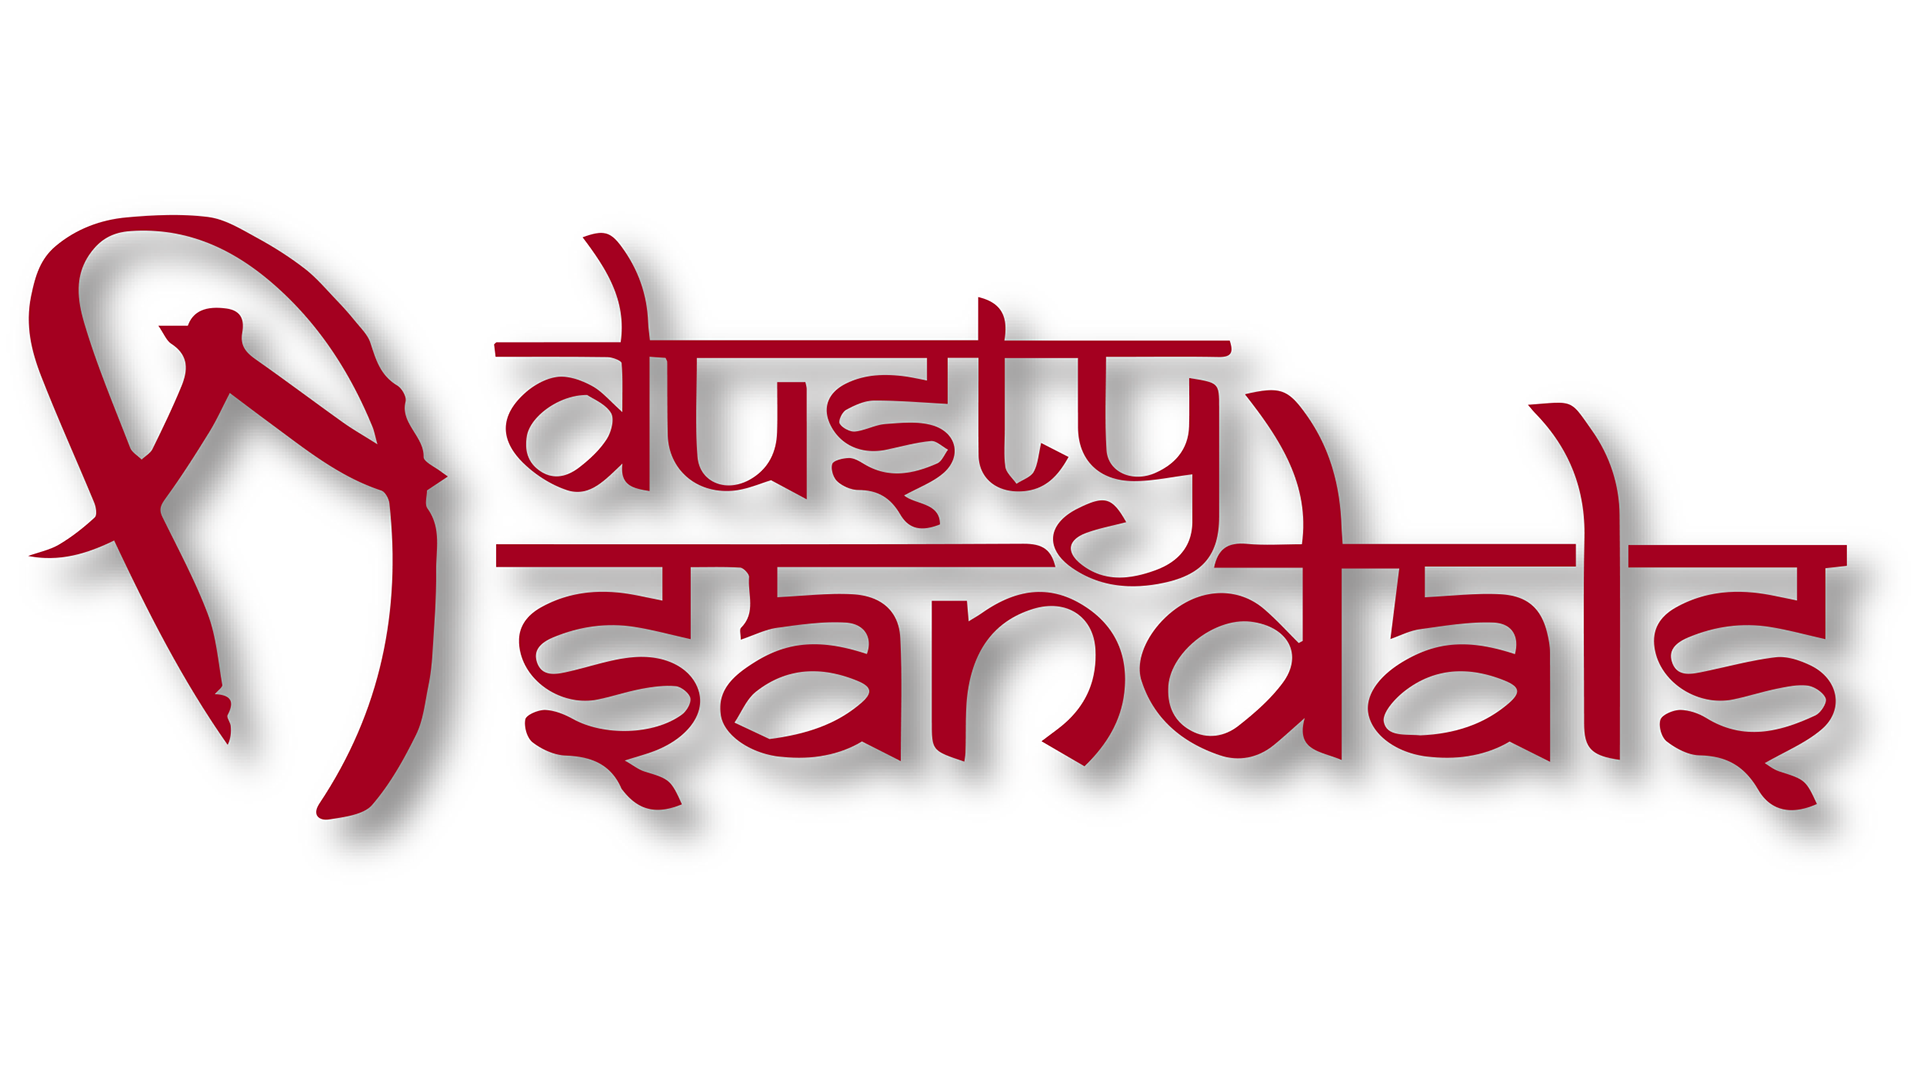 Dusty Sandals logo